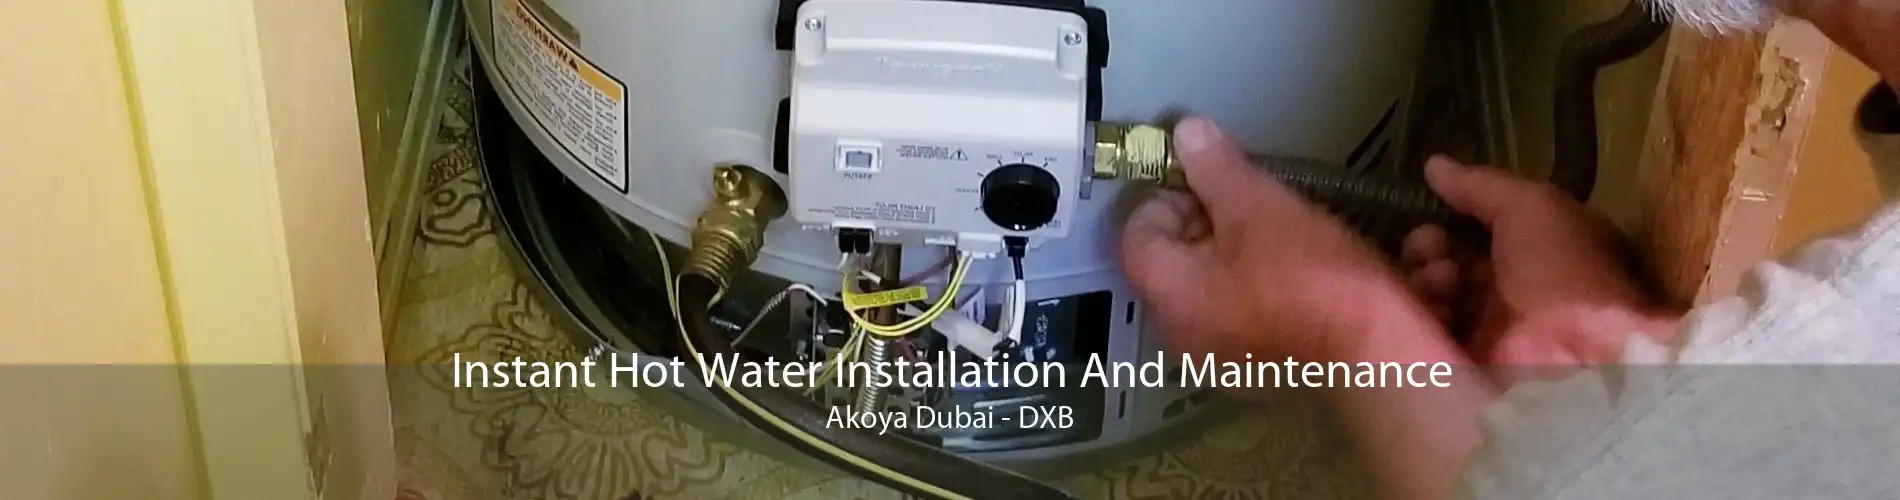 Instant Hot Water Installation And Maintenance Akoya Dubai - DXB